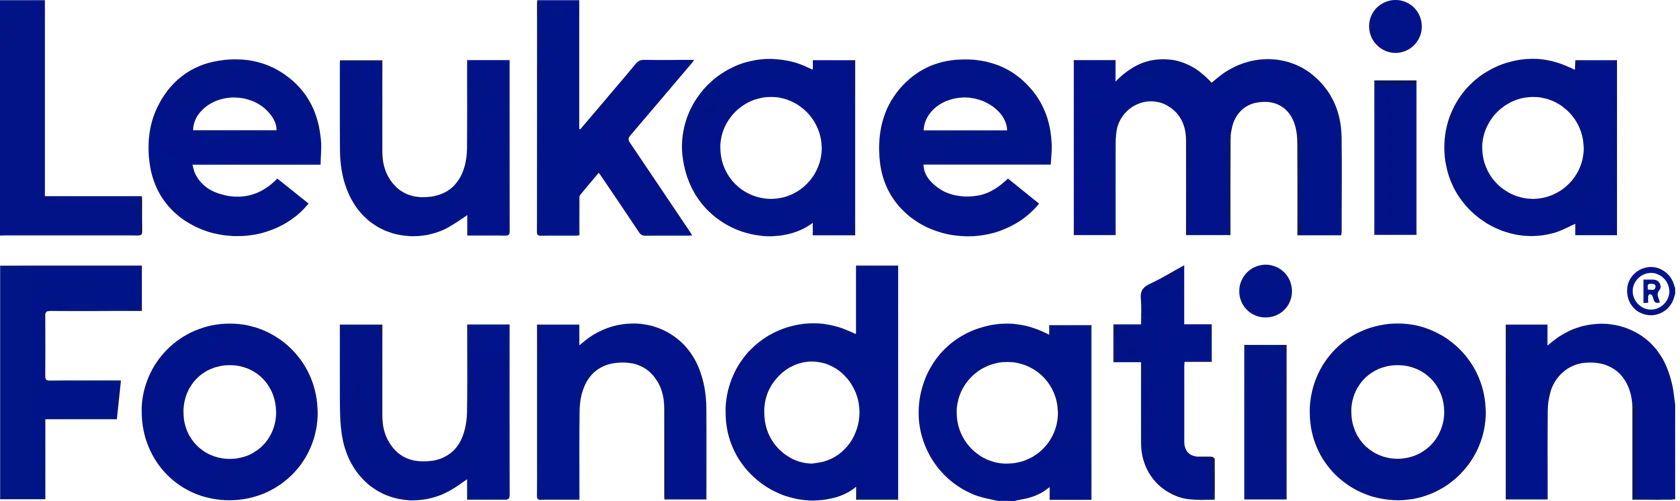 The Leukaemia Foundation logo